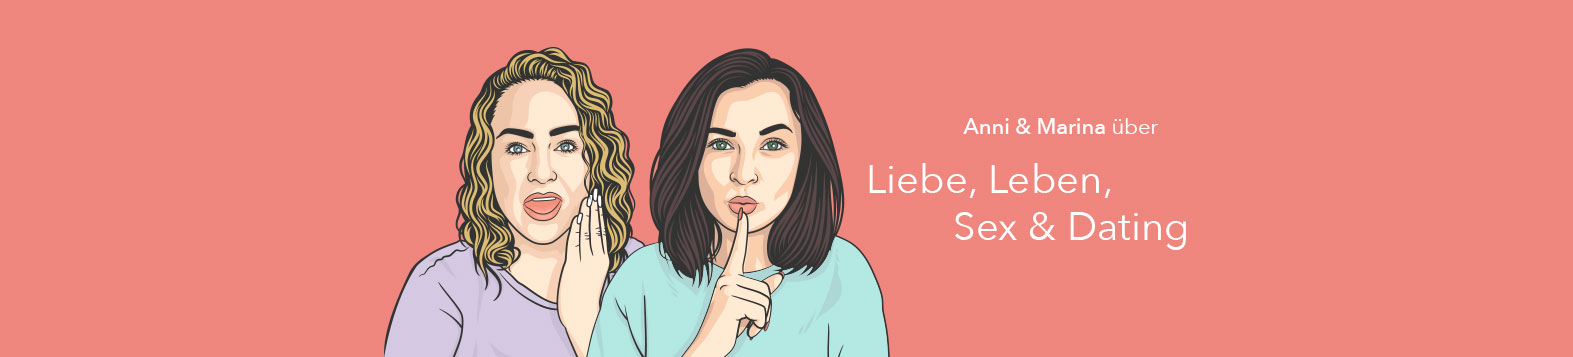 Female Podcast - Liebe, Leben, Sex & Dating - Anni & Marina